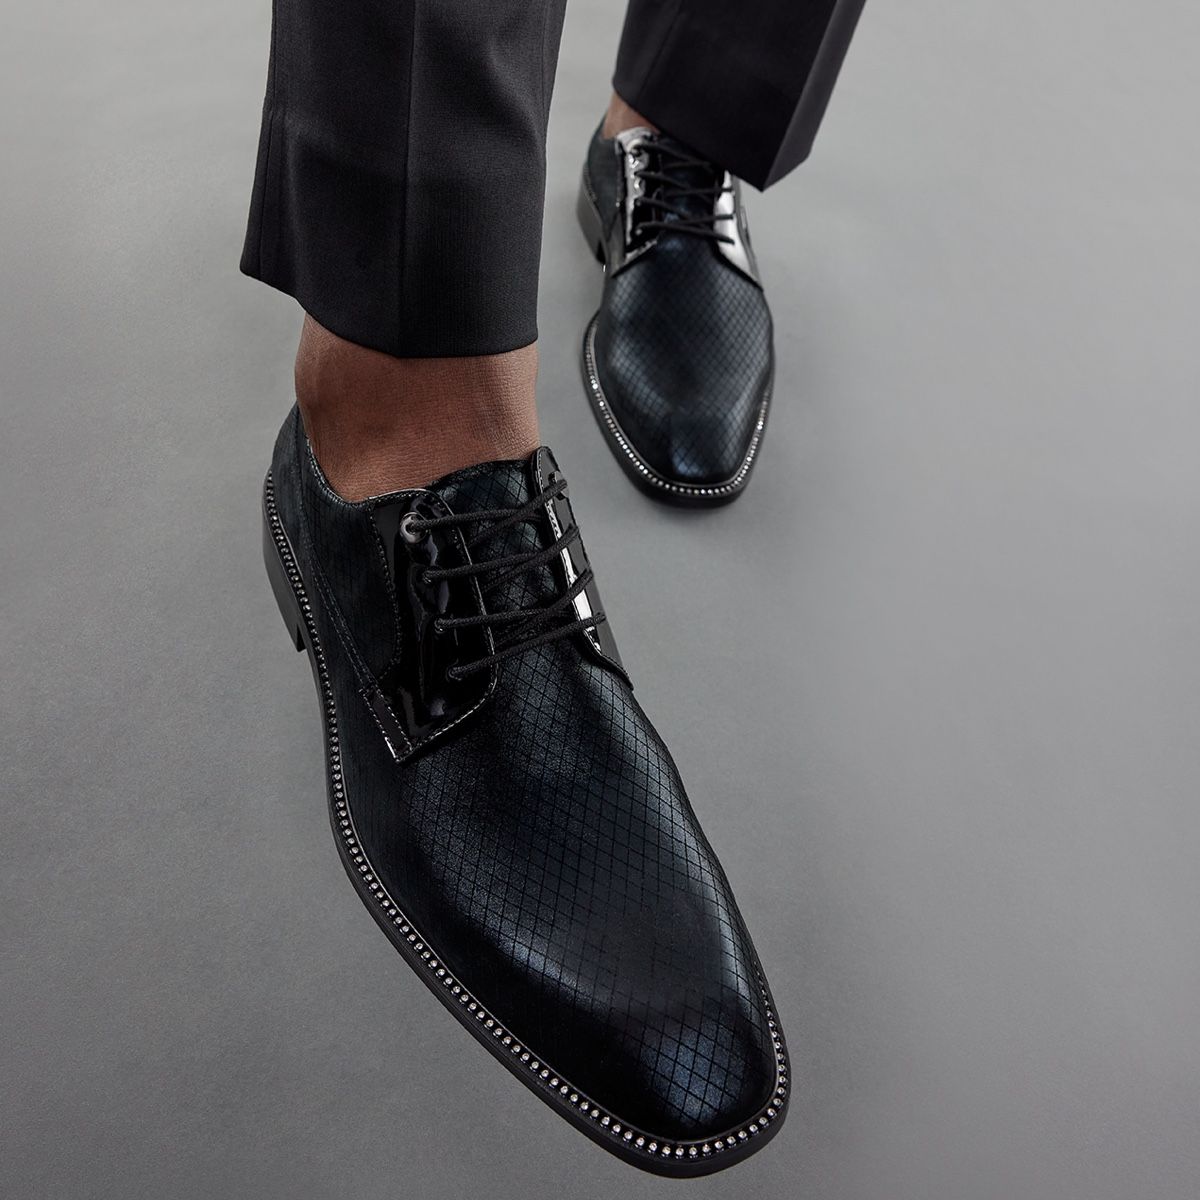 ALDO VERADIEN Men Size 8 & 9 Dress Shoes New In Box. Classic Men’s Loafers